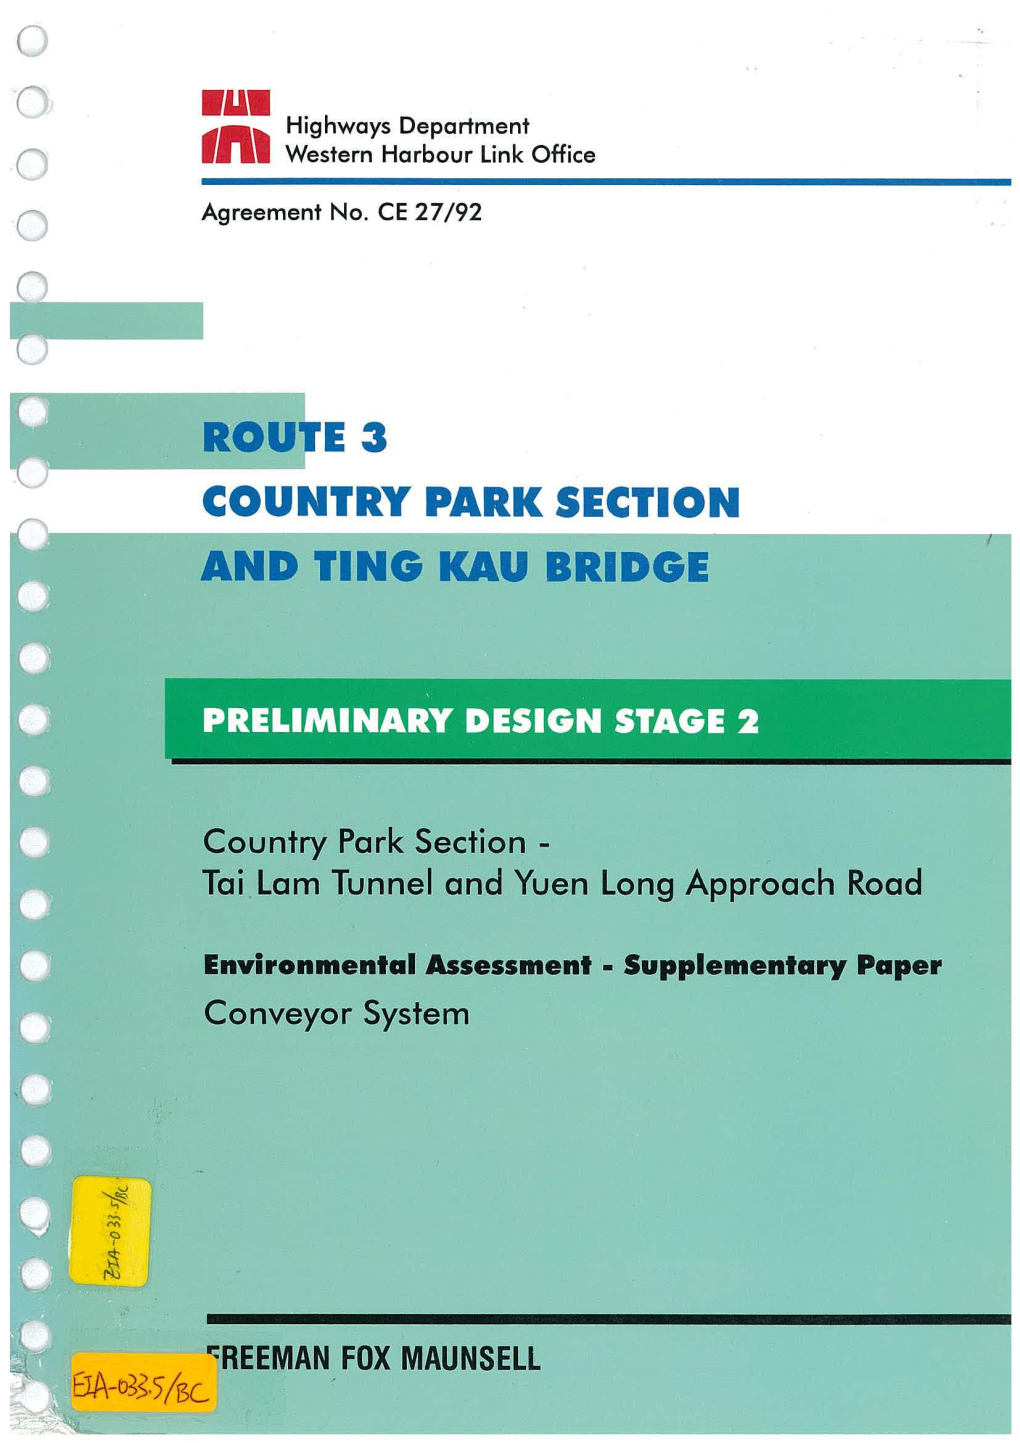 Supplementary Paper Conveyor System